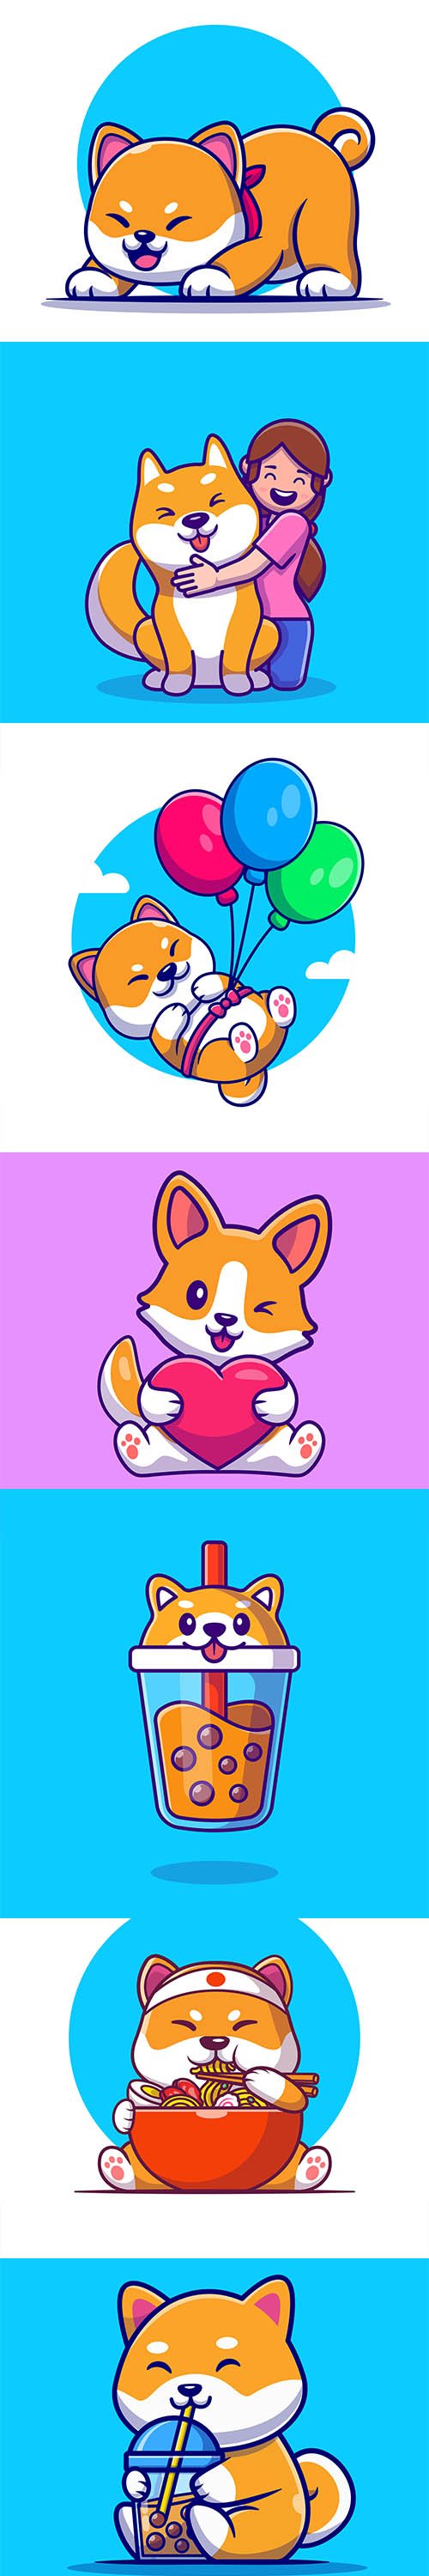 Cute shiba inu dog cartoon illustration set vol 2